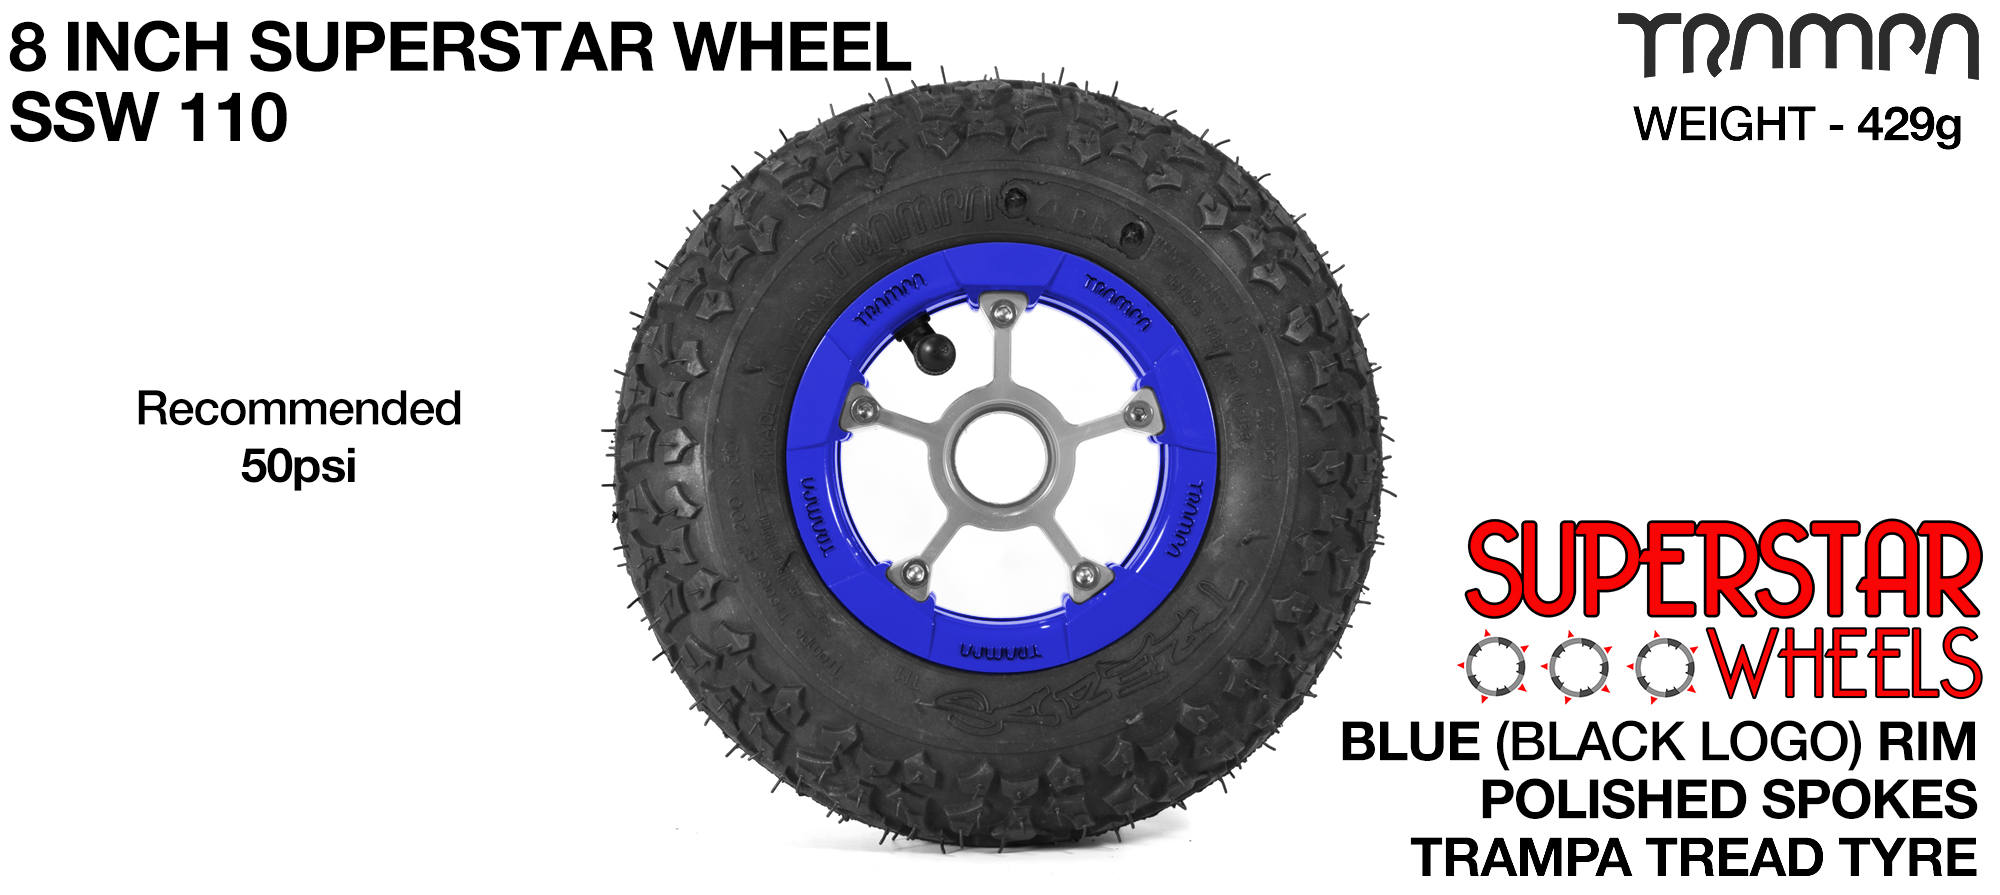 Superstar 8 inch wheels -  Blue & Black Logo Rim Silver Anodised spokes & TRAMPA TREAD 8 inch Tyre